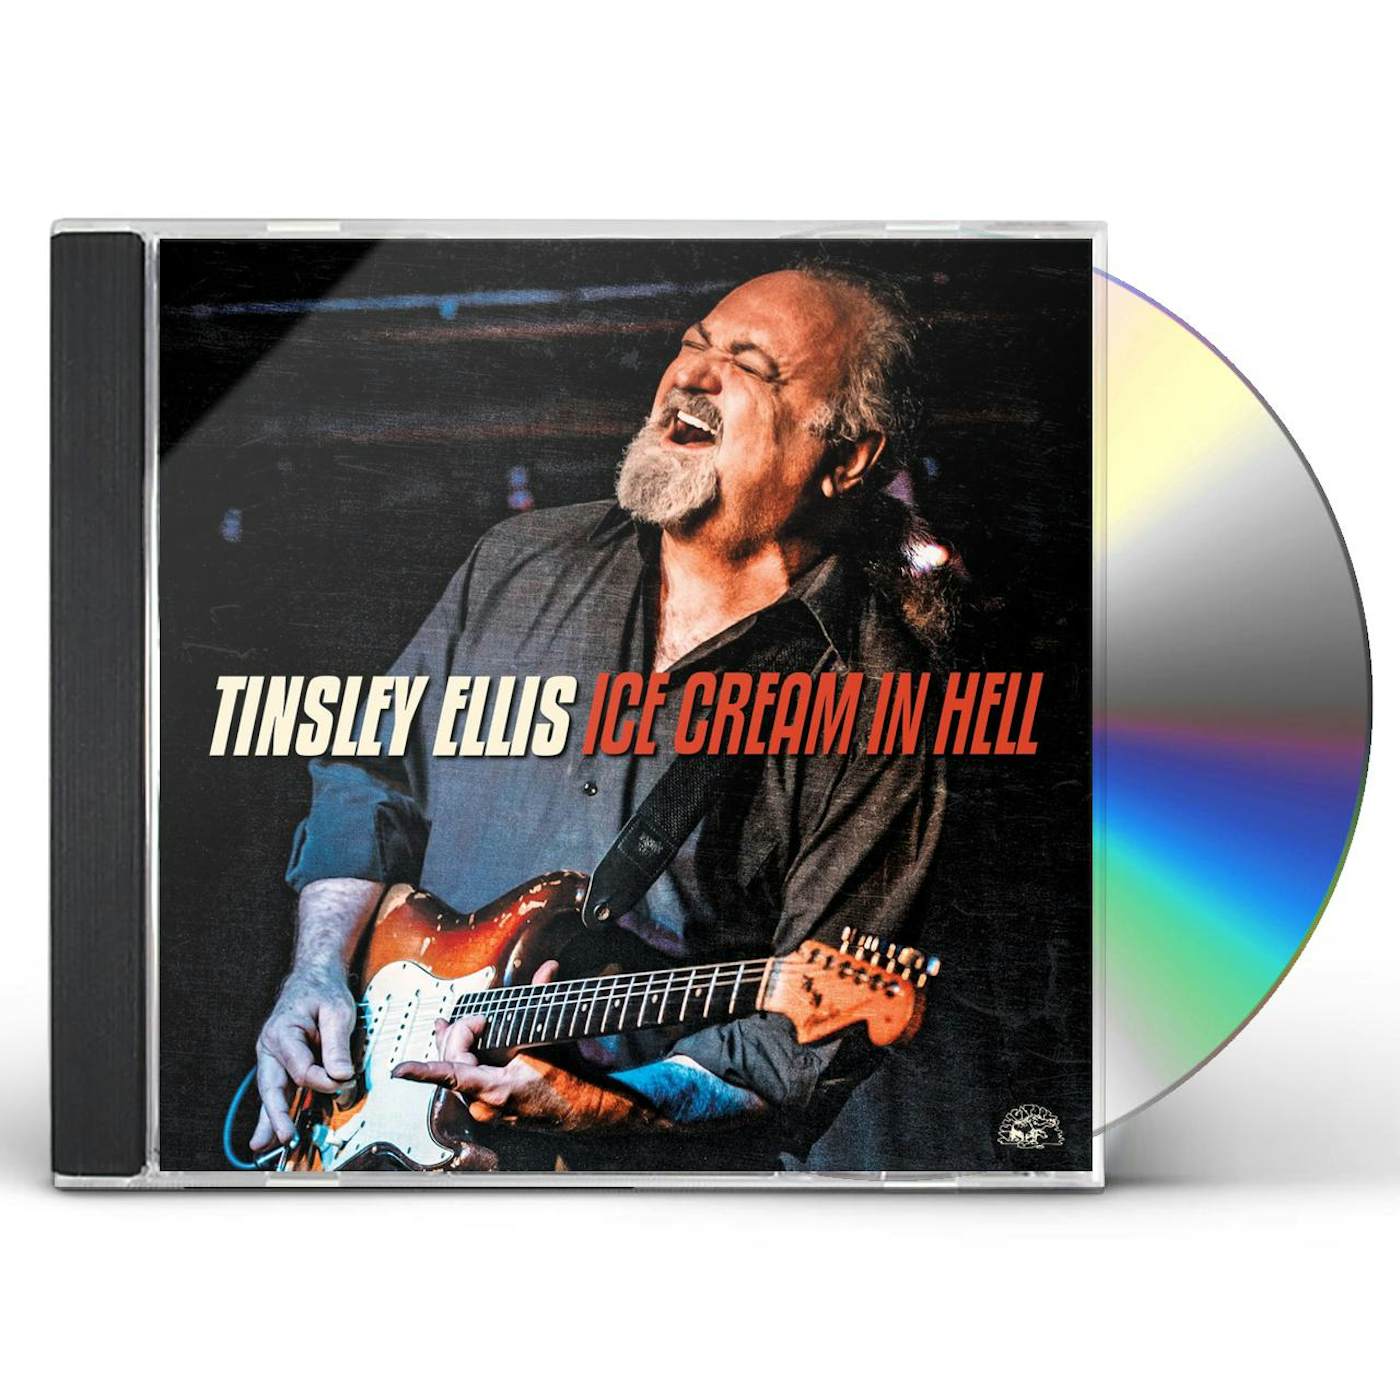 Tinsley Ellis ICE CREAM IN HELL CD